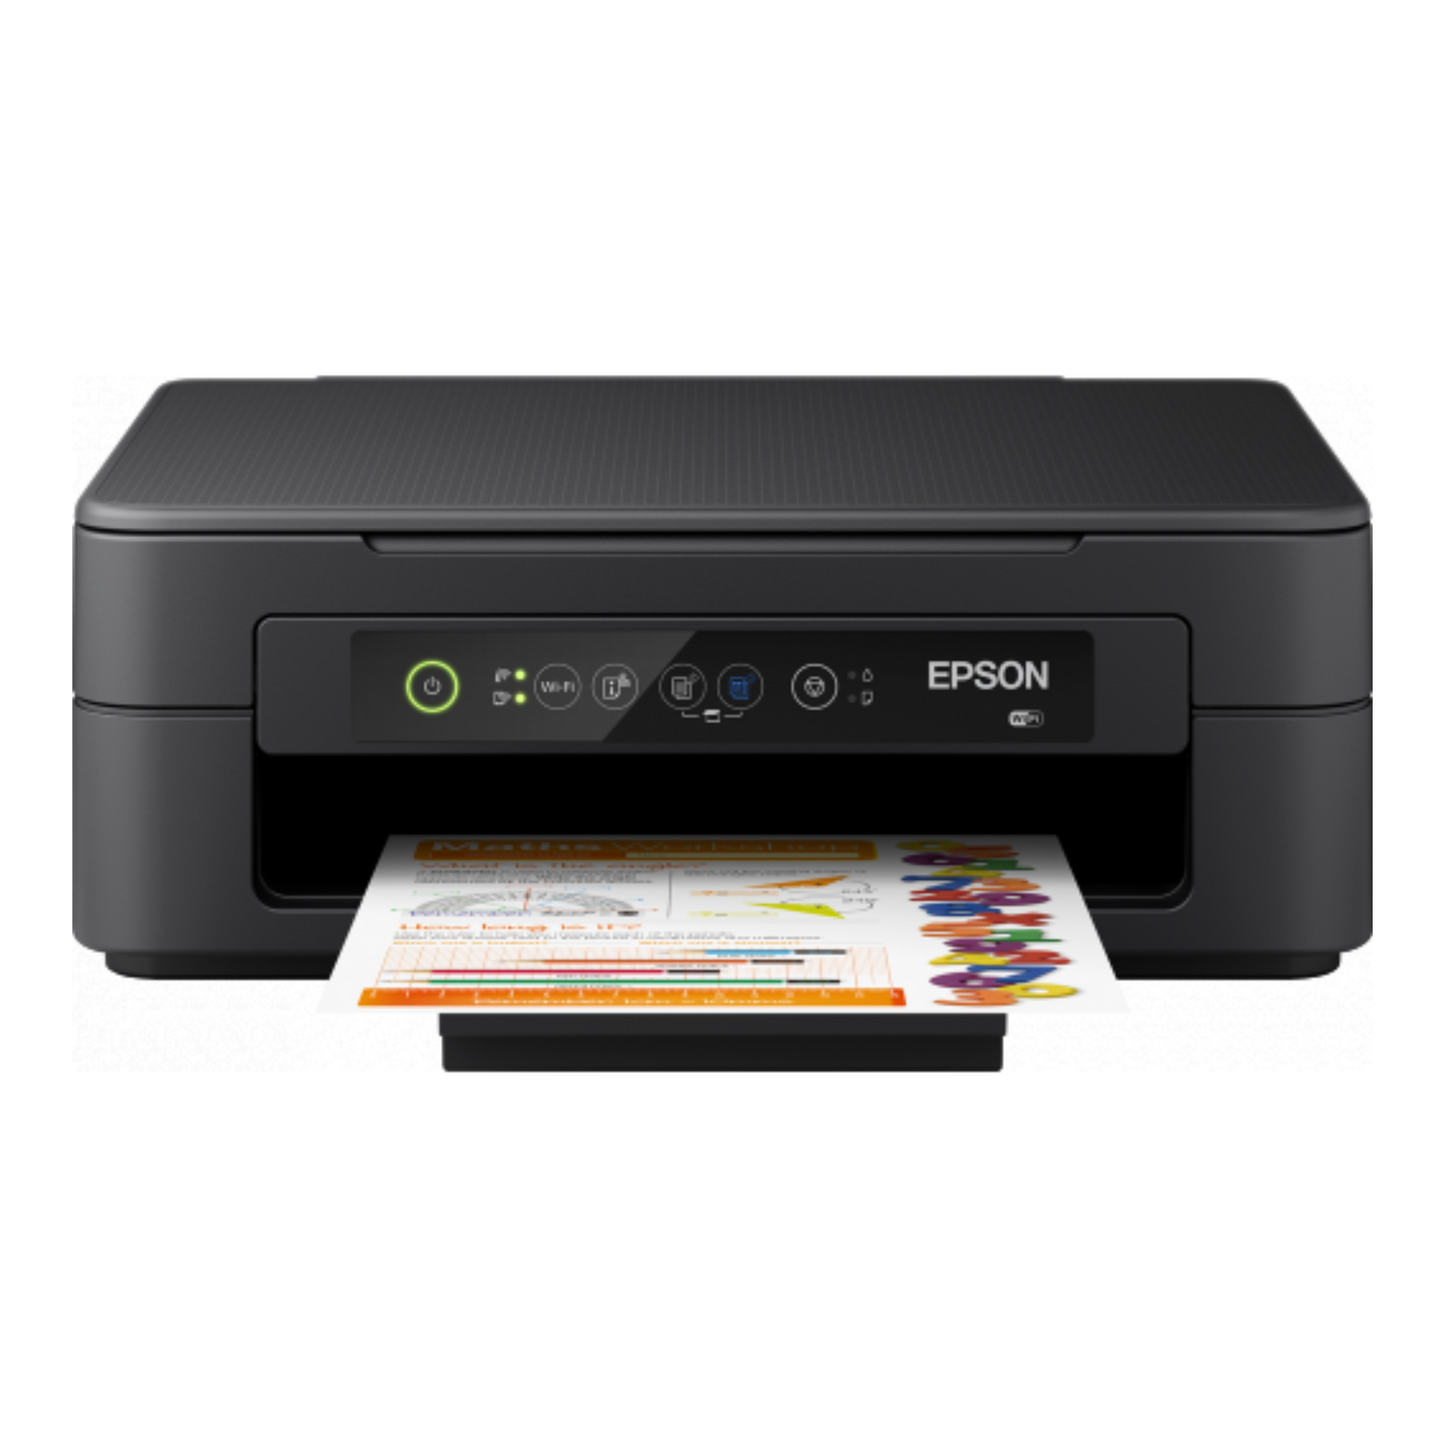 Epson XP-2200 All-in-one printer scanner copier